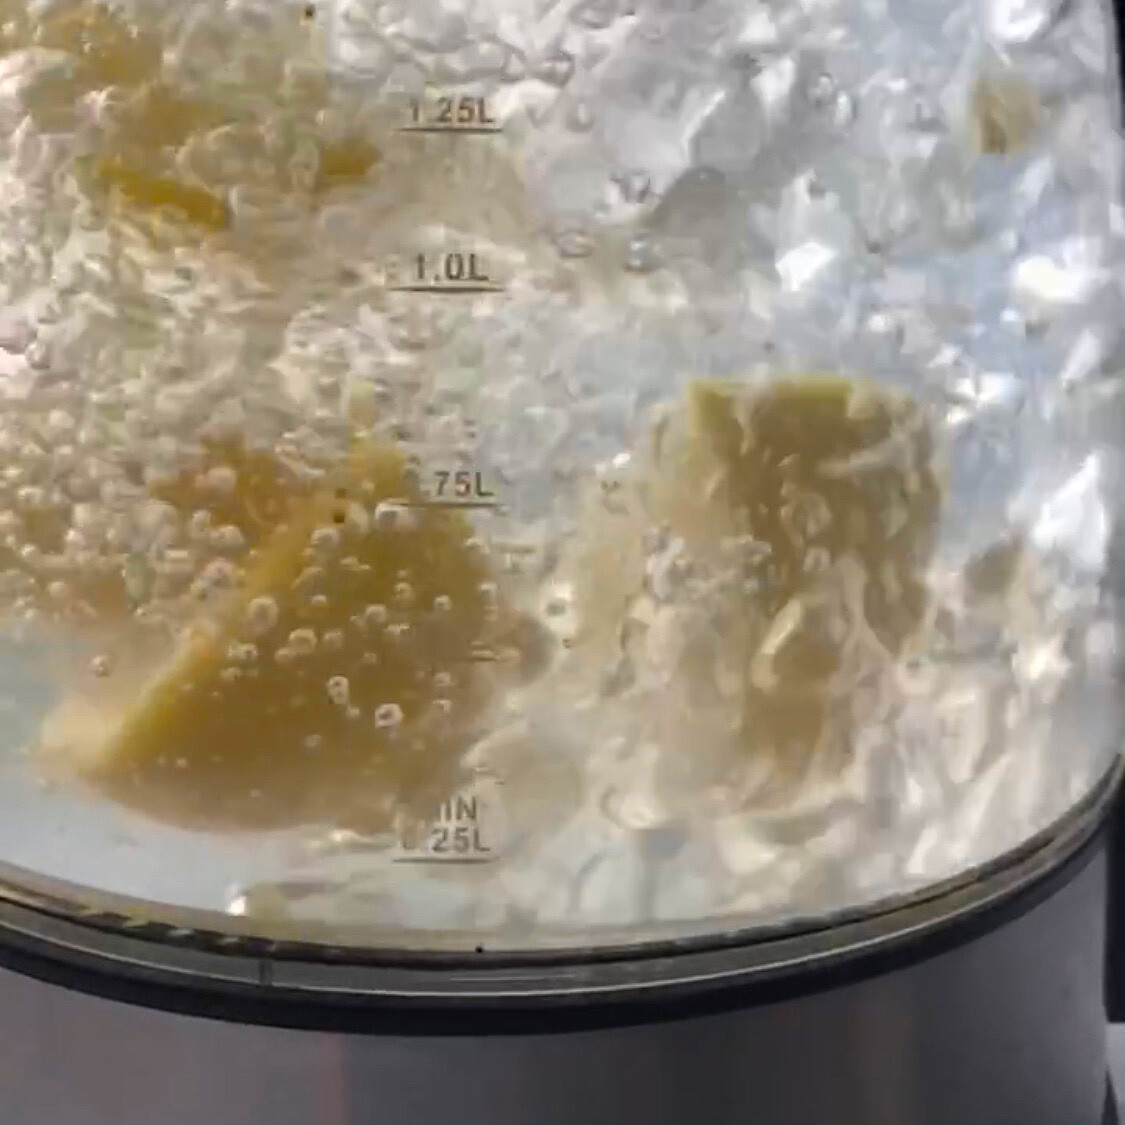 lemons being boiled in kettle